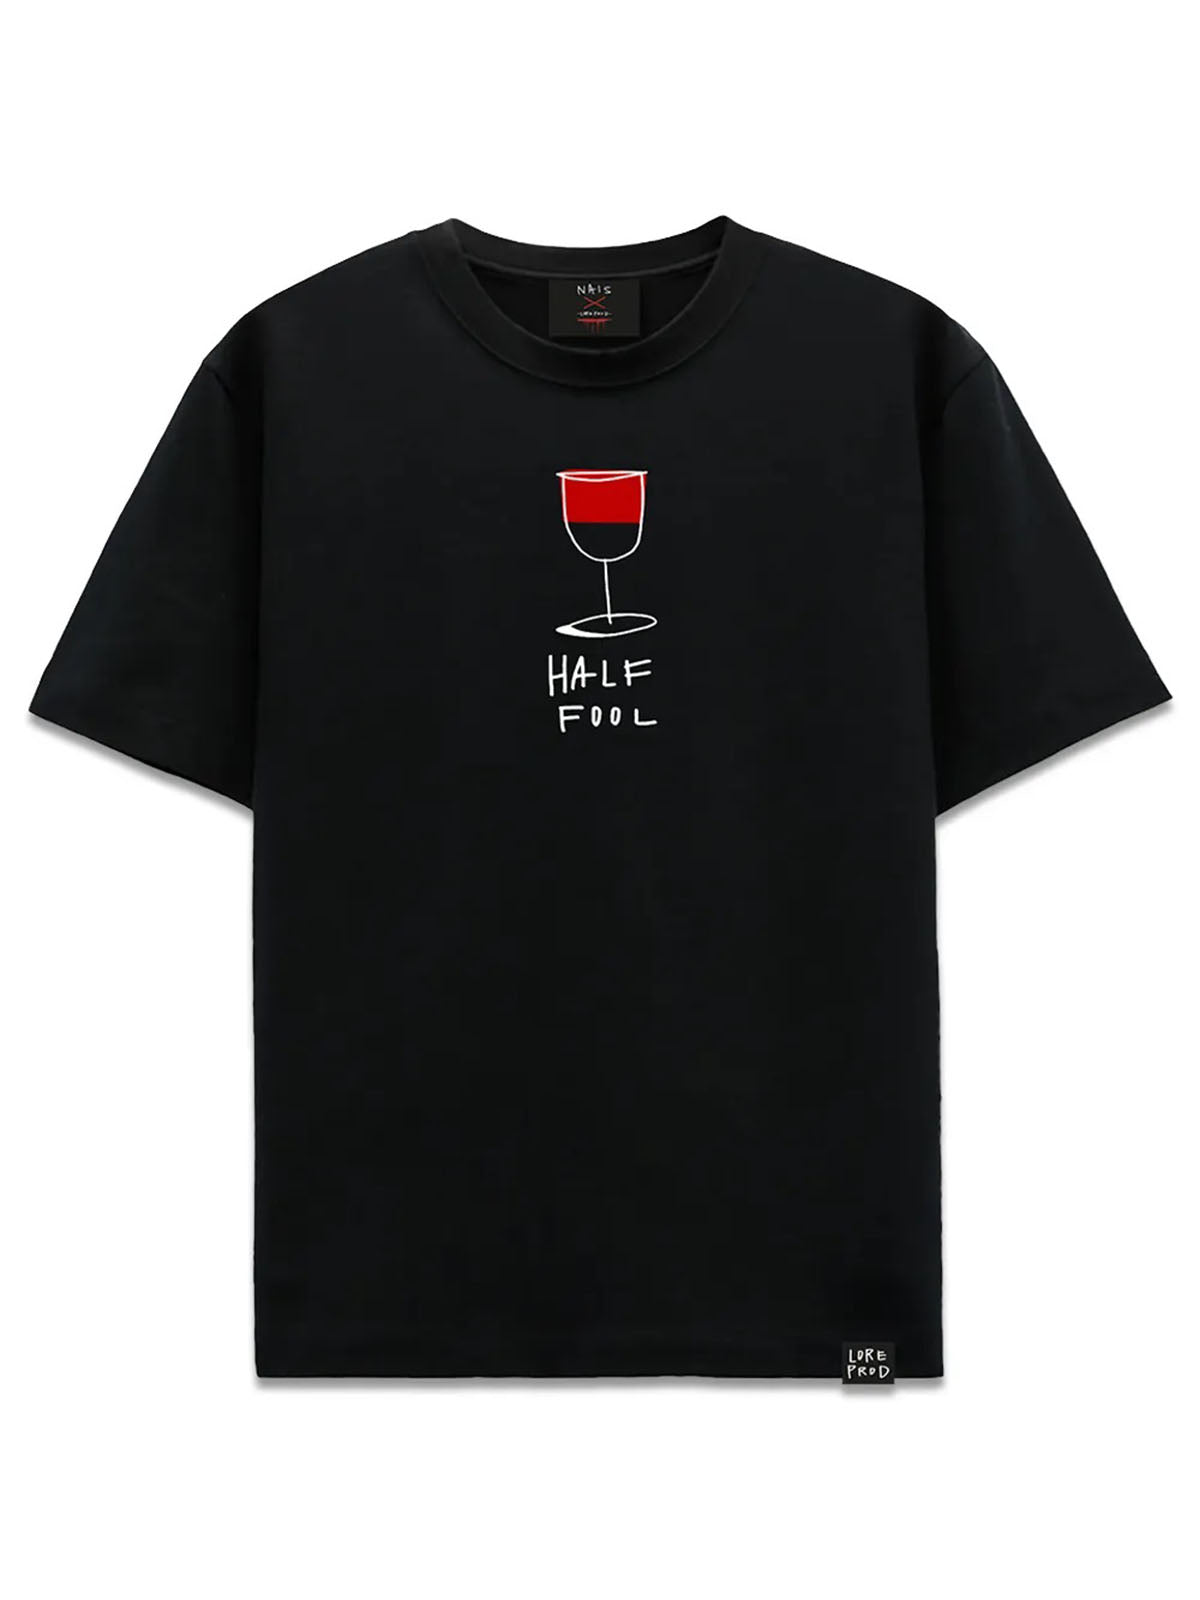 Nais Men's T-Shirt - Last Sip Lore Prod X Nais Tee - Black